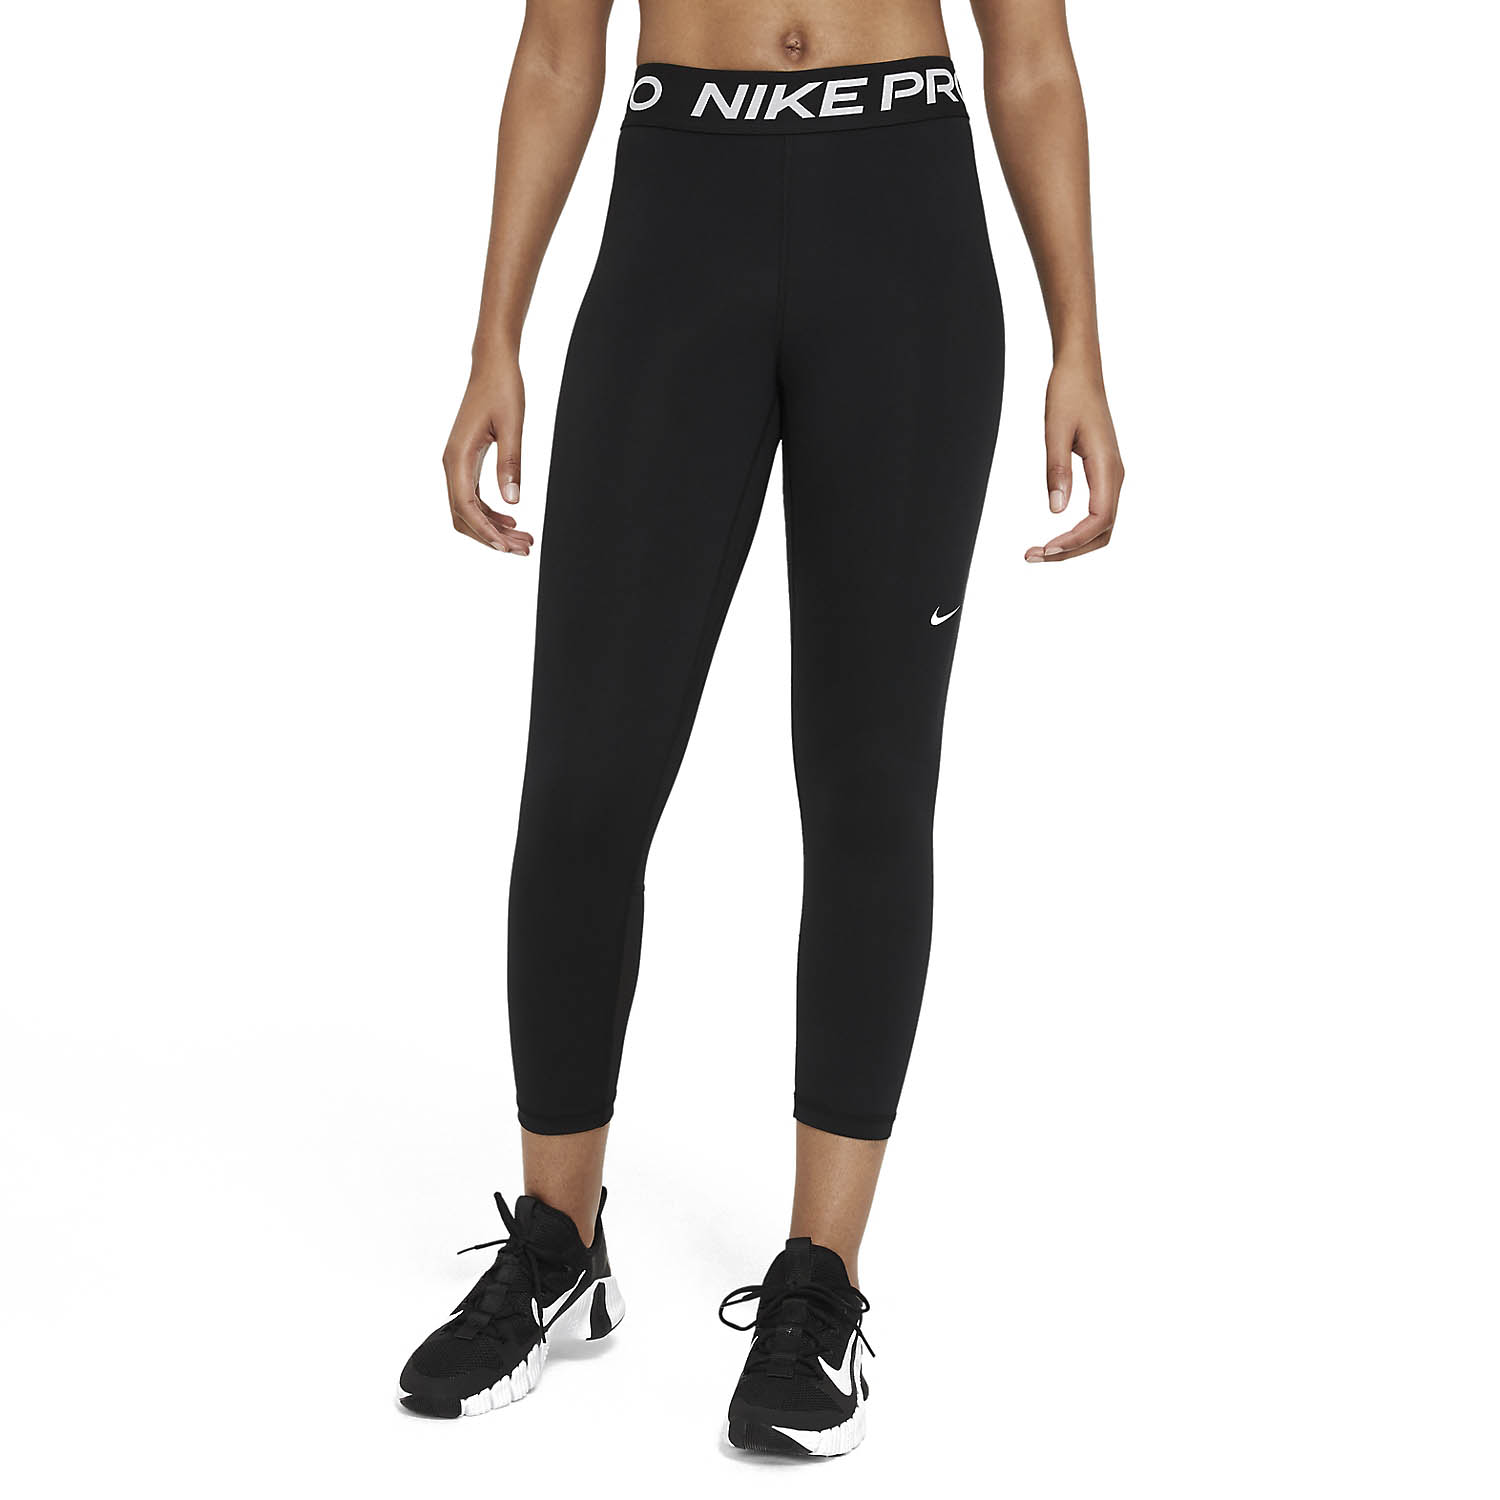 Nike Yoga Pants: Move & Stretch With Ease in Nike Yoga Pants